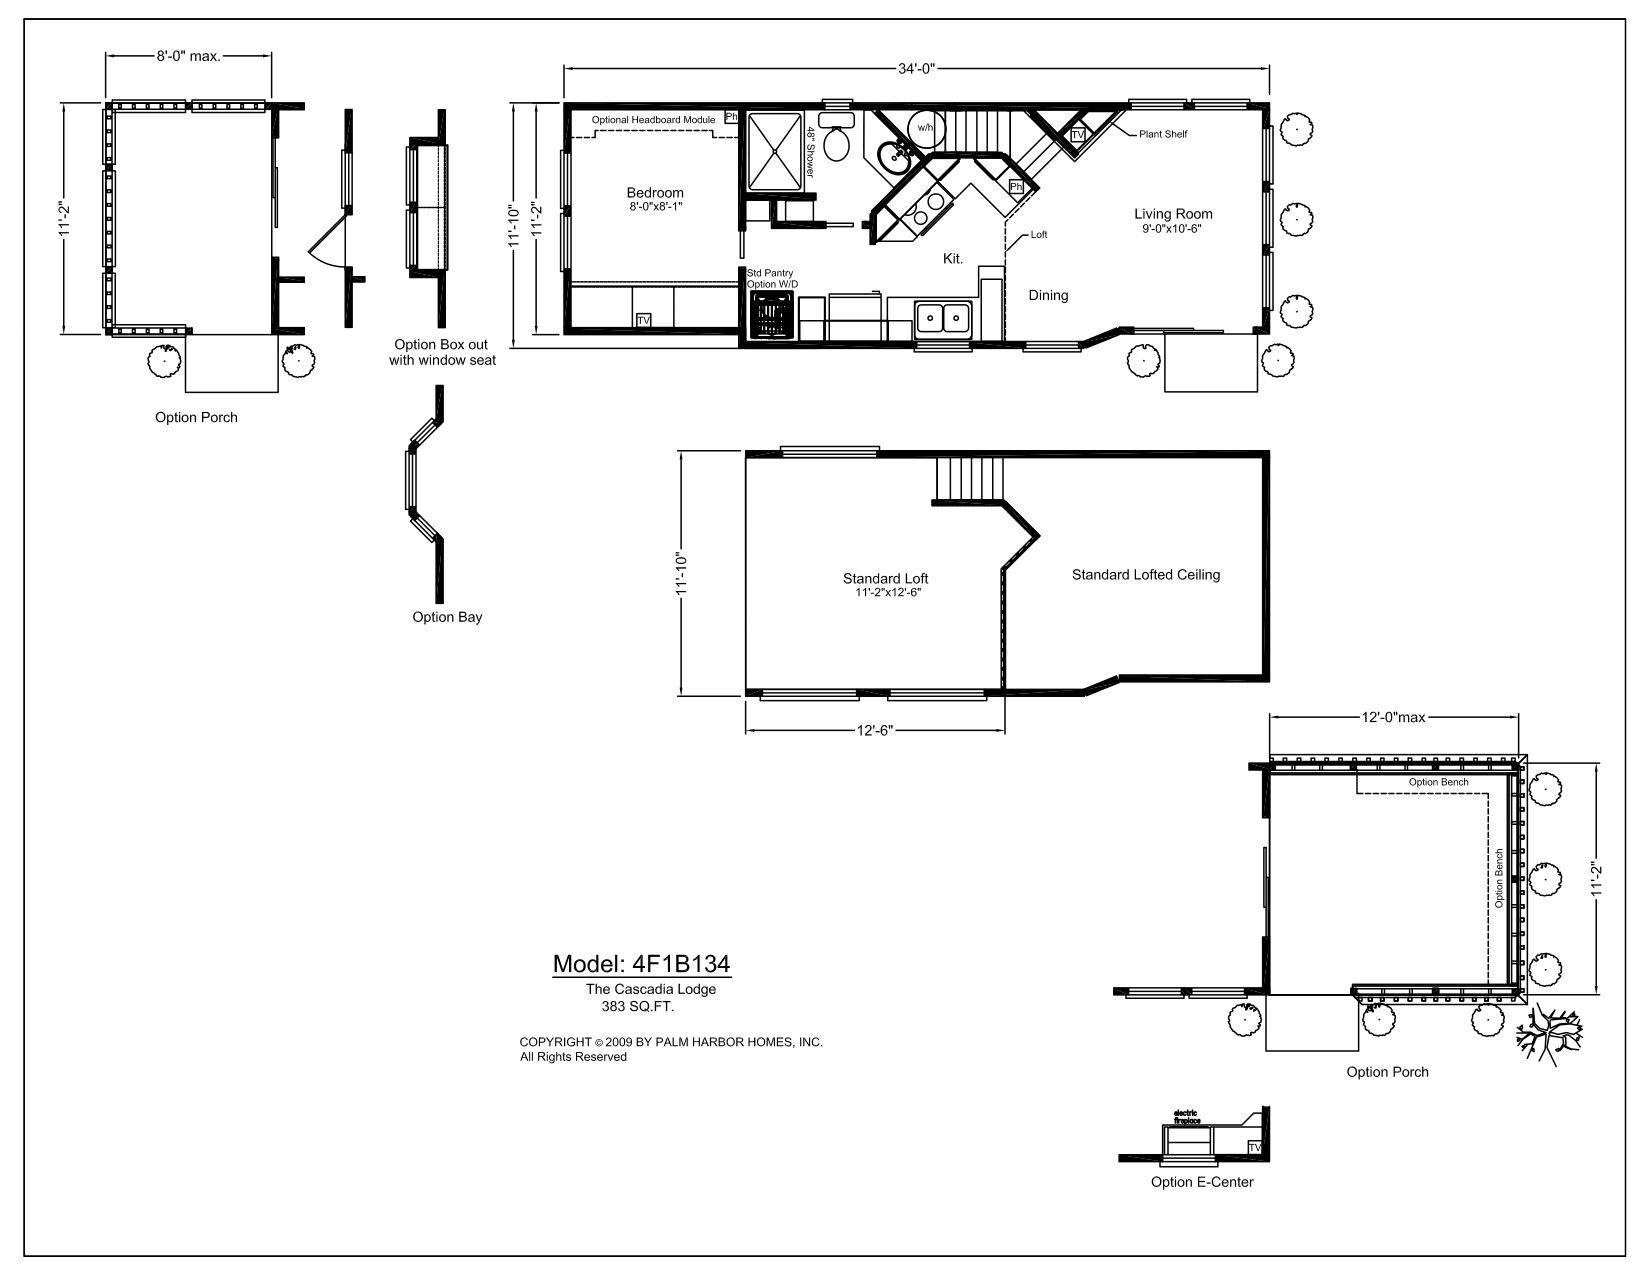 Homes Direct Modular Homes - Model 4F1B134 - Floorplan